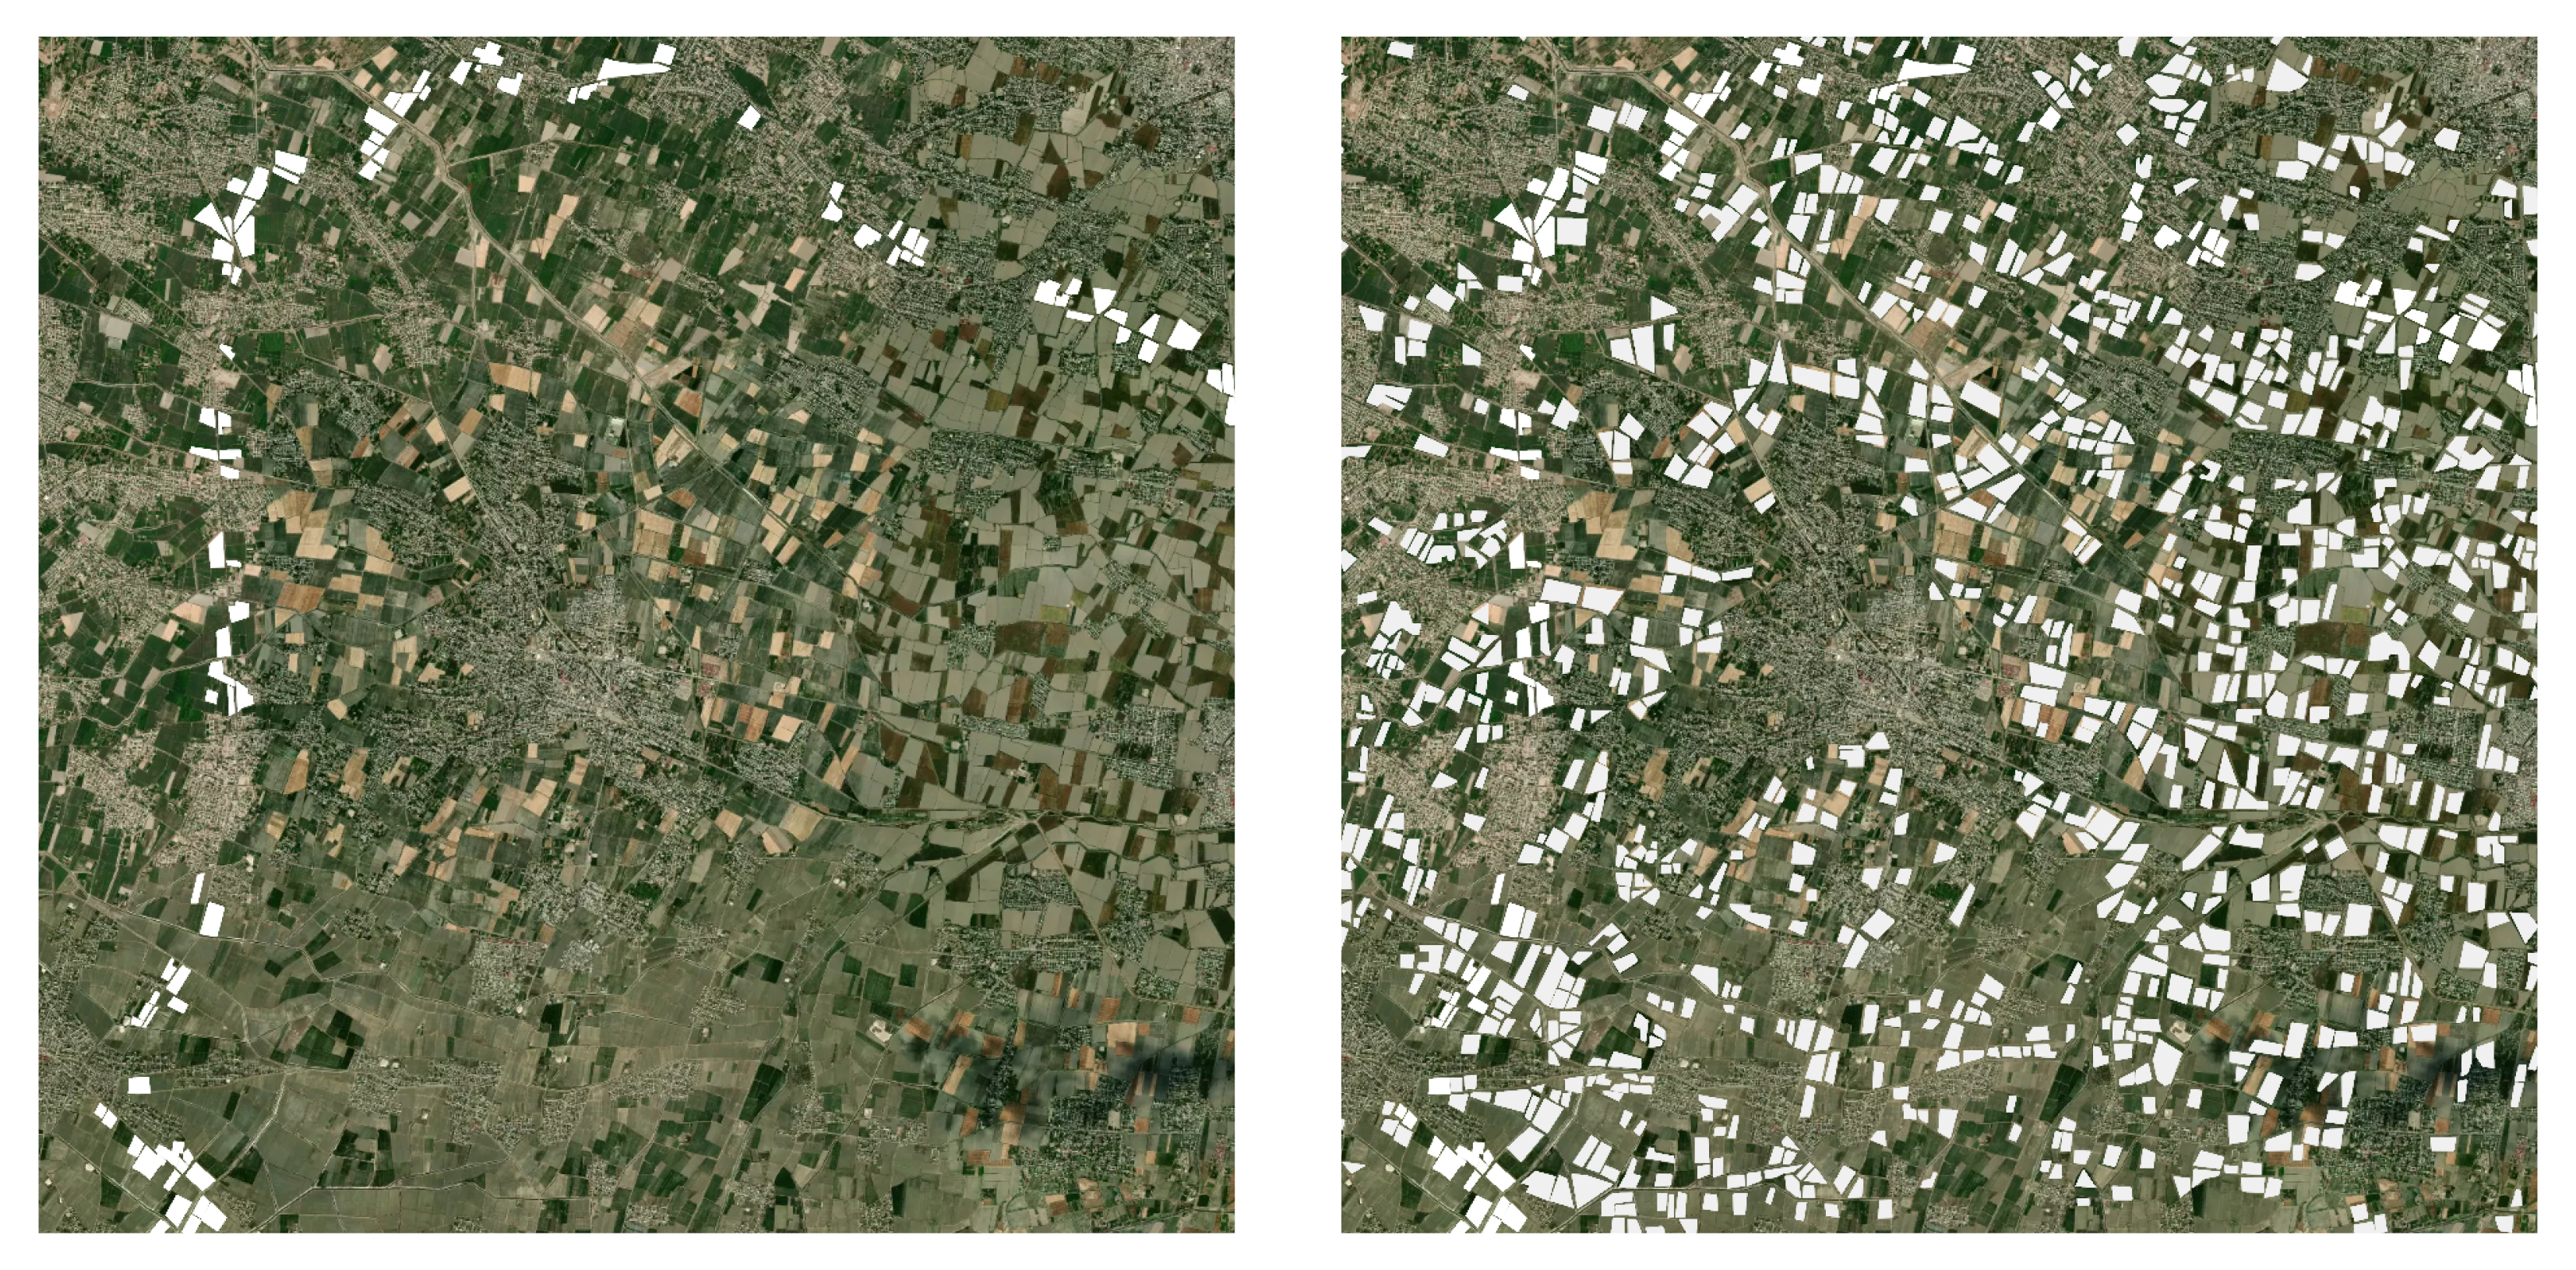 Identifying cotton fields. Left: Manual detection of cotton fields (pale areas) alongside roads. Right: Automated detection of cotton fields using CoCuRA. Credit: Marple